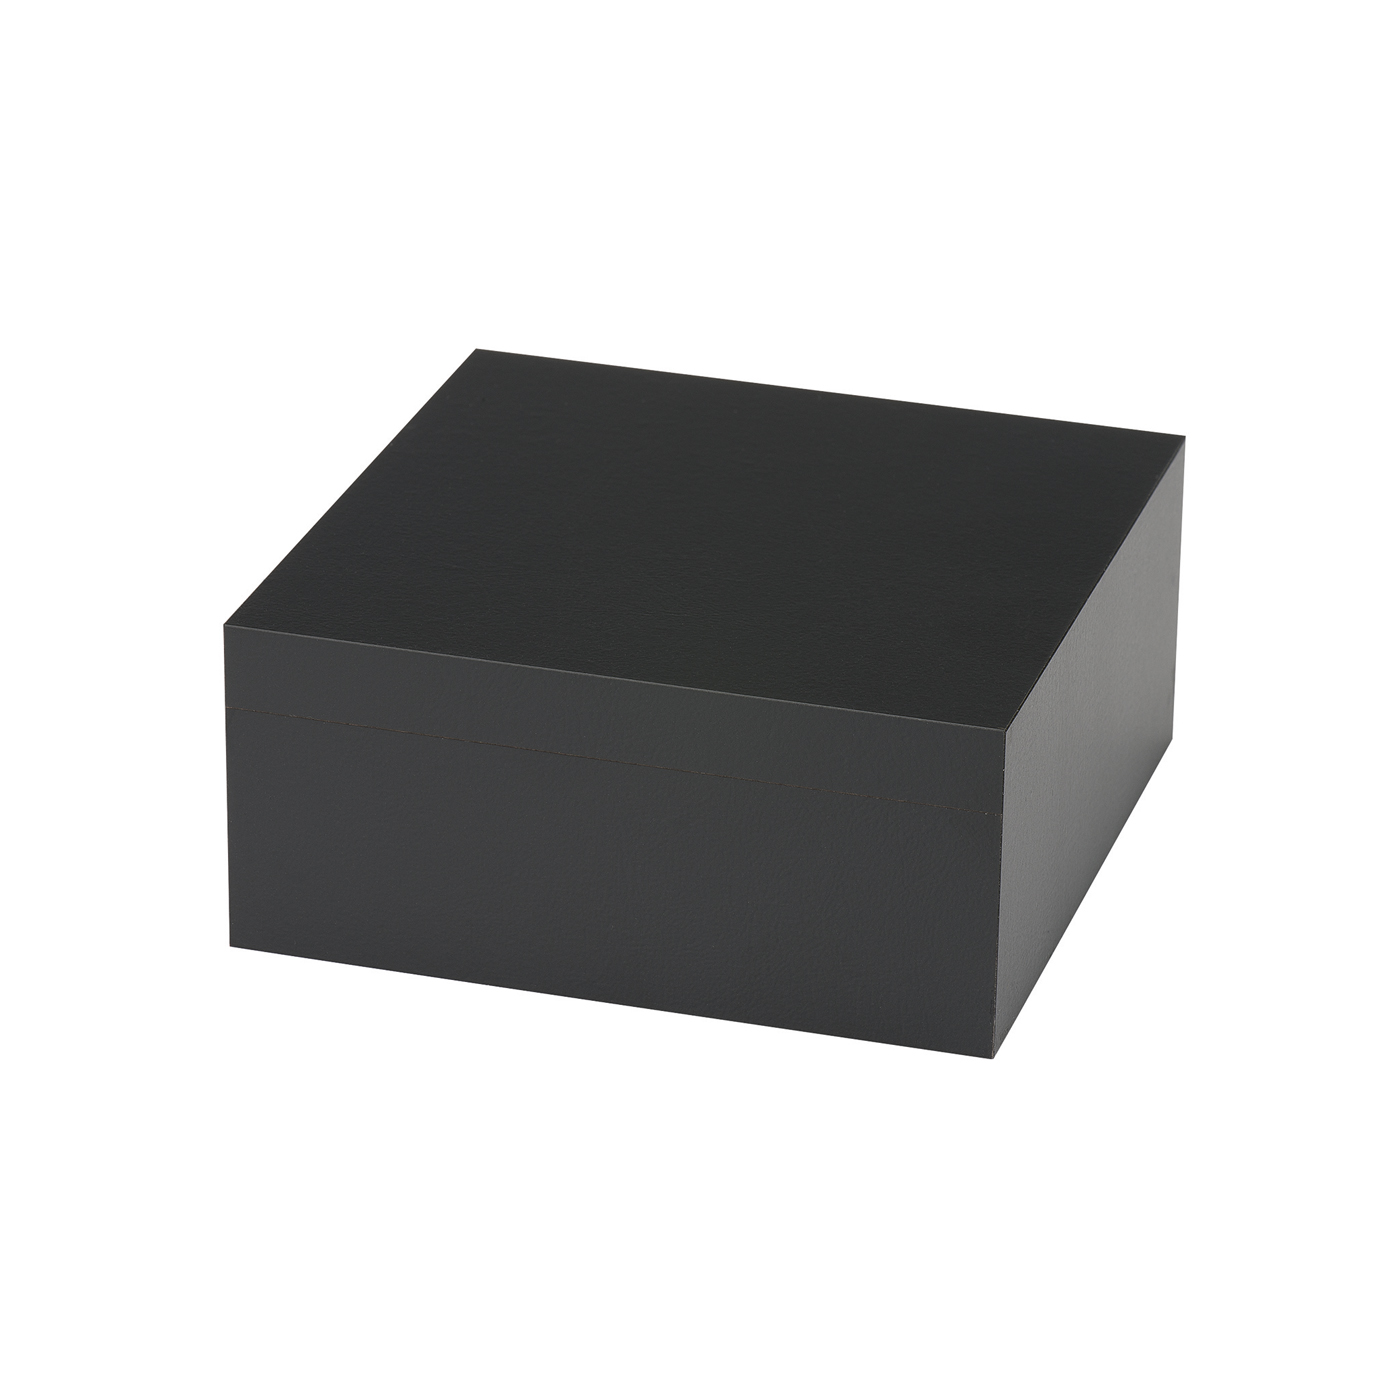 PICA-Design Schmucketui "Blackbox", 90 x 90 x 40 cm - 1 Stück